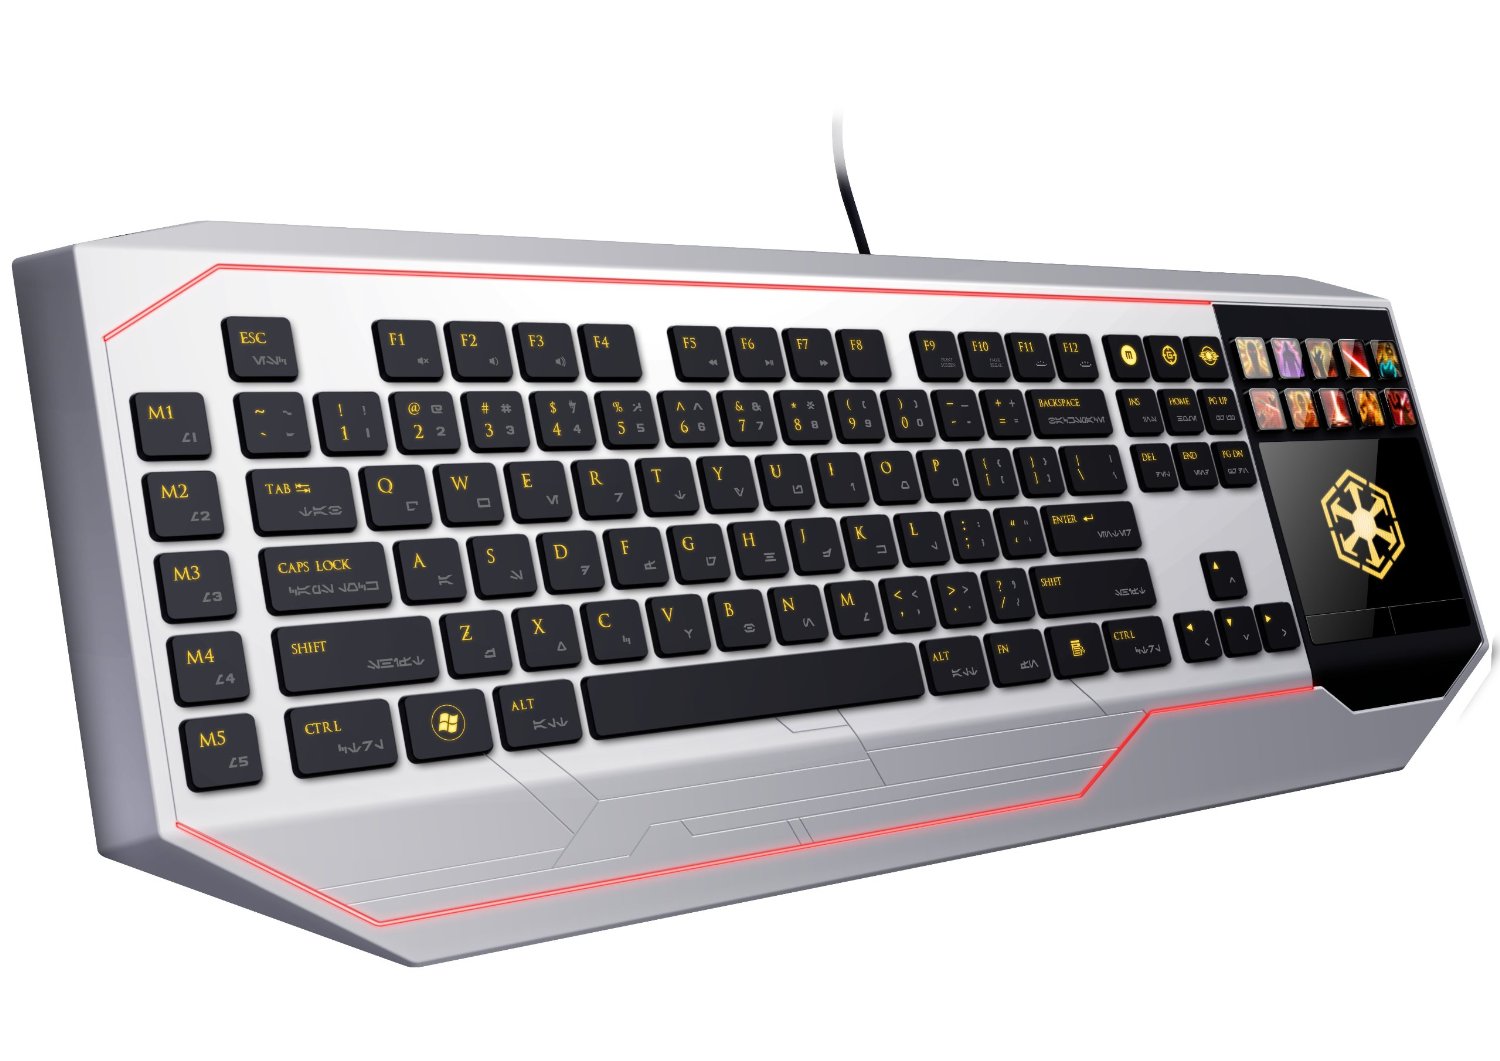 Star Wars Gift Keyboard by Razer